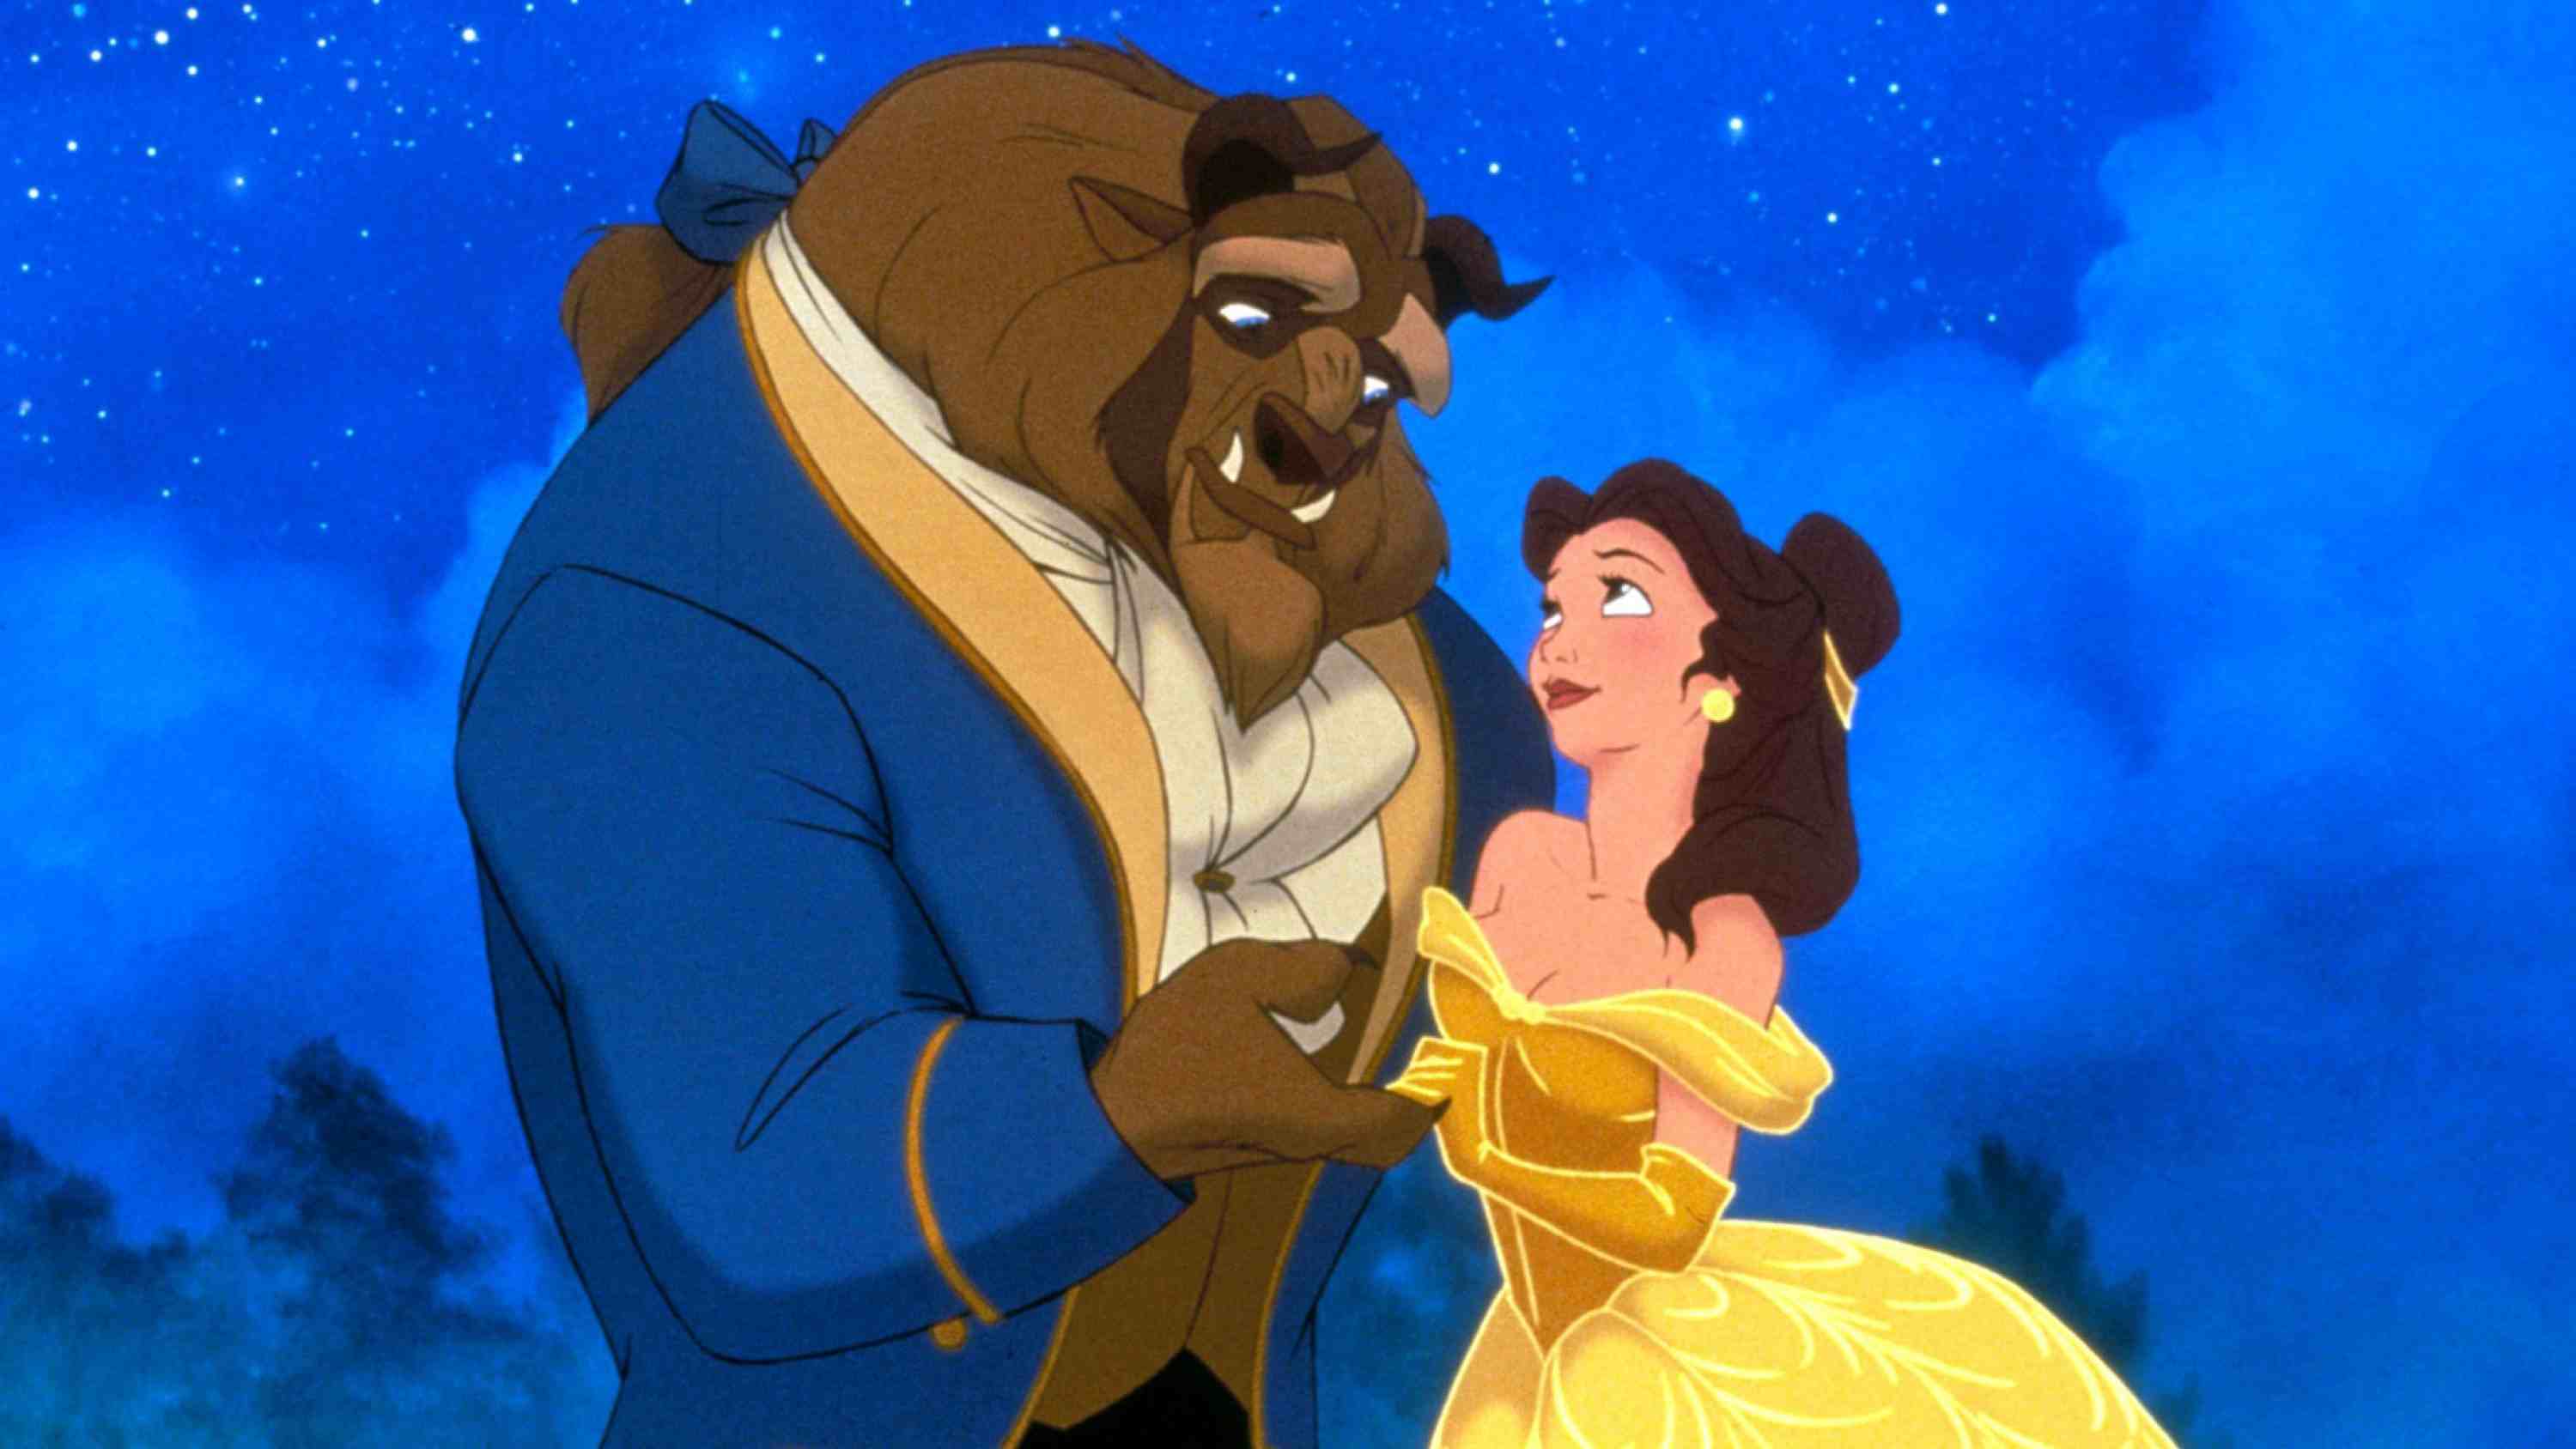 The Top 9 Disney Romance Movies